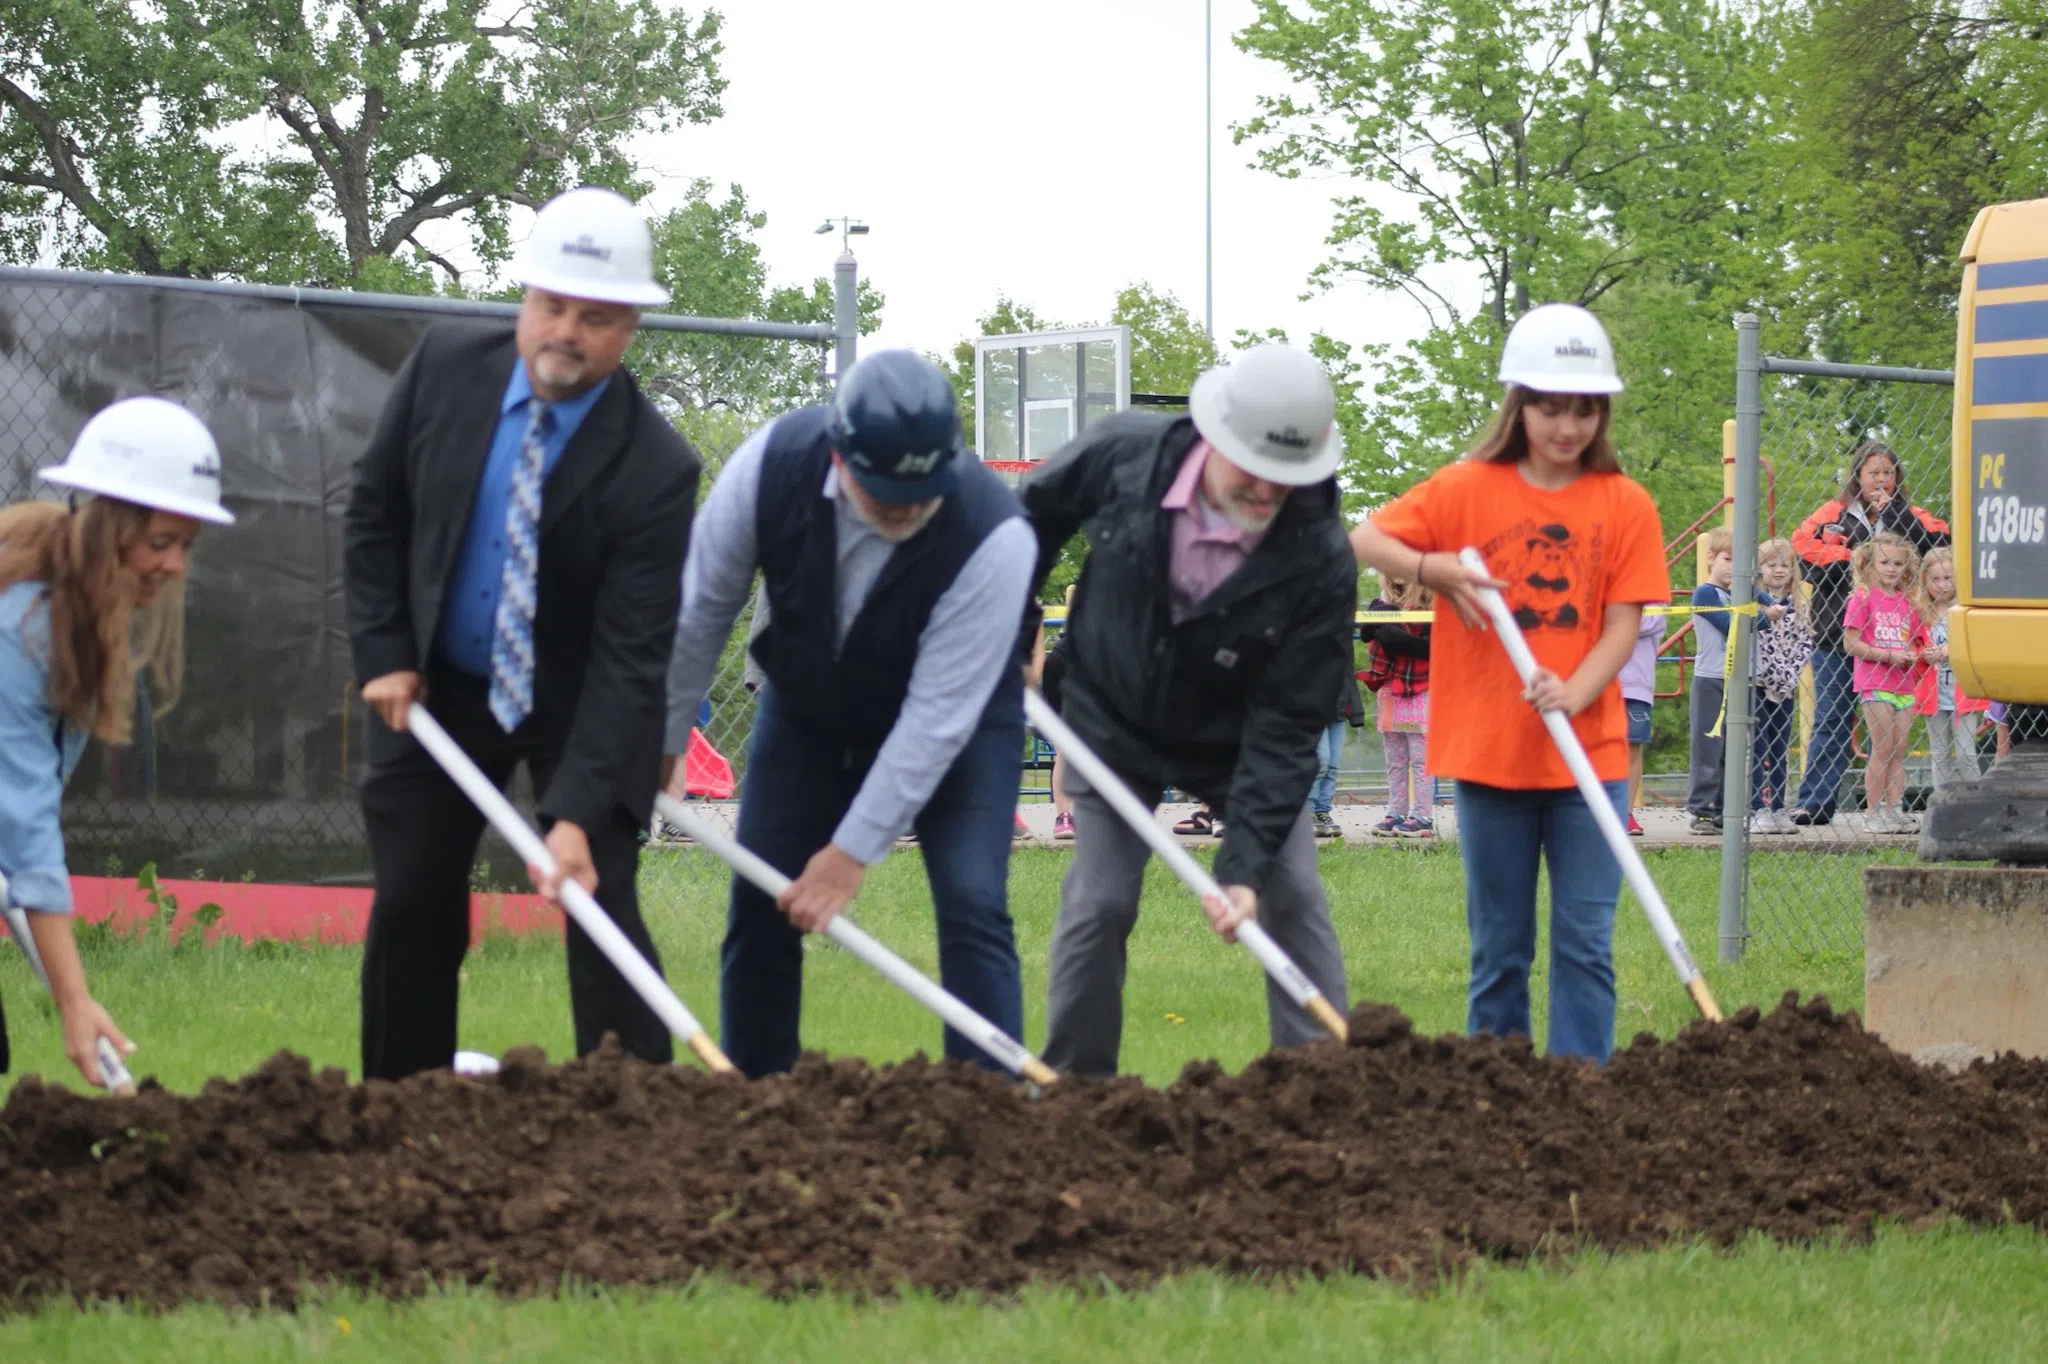 Construction beginning soon on USD 421 Lyndon's nearly $9 million Collaborative Learning Center